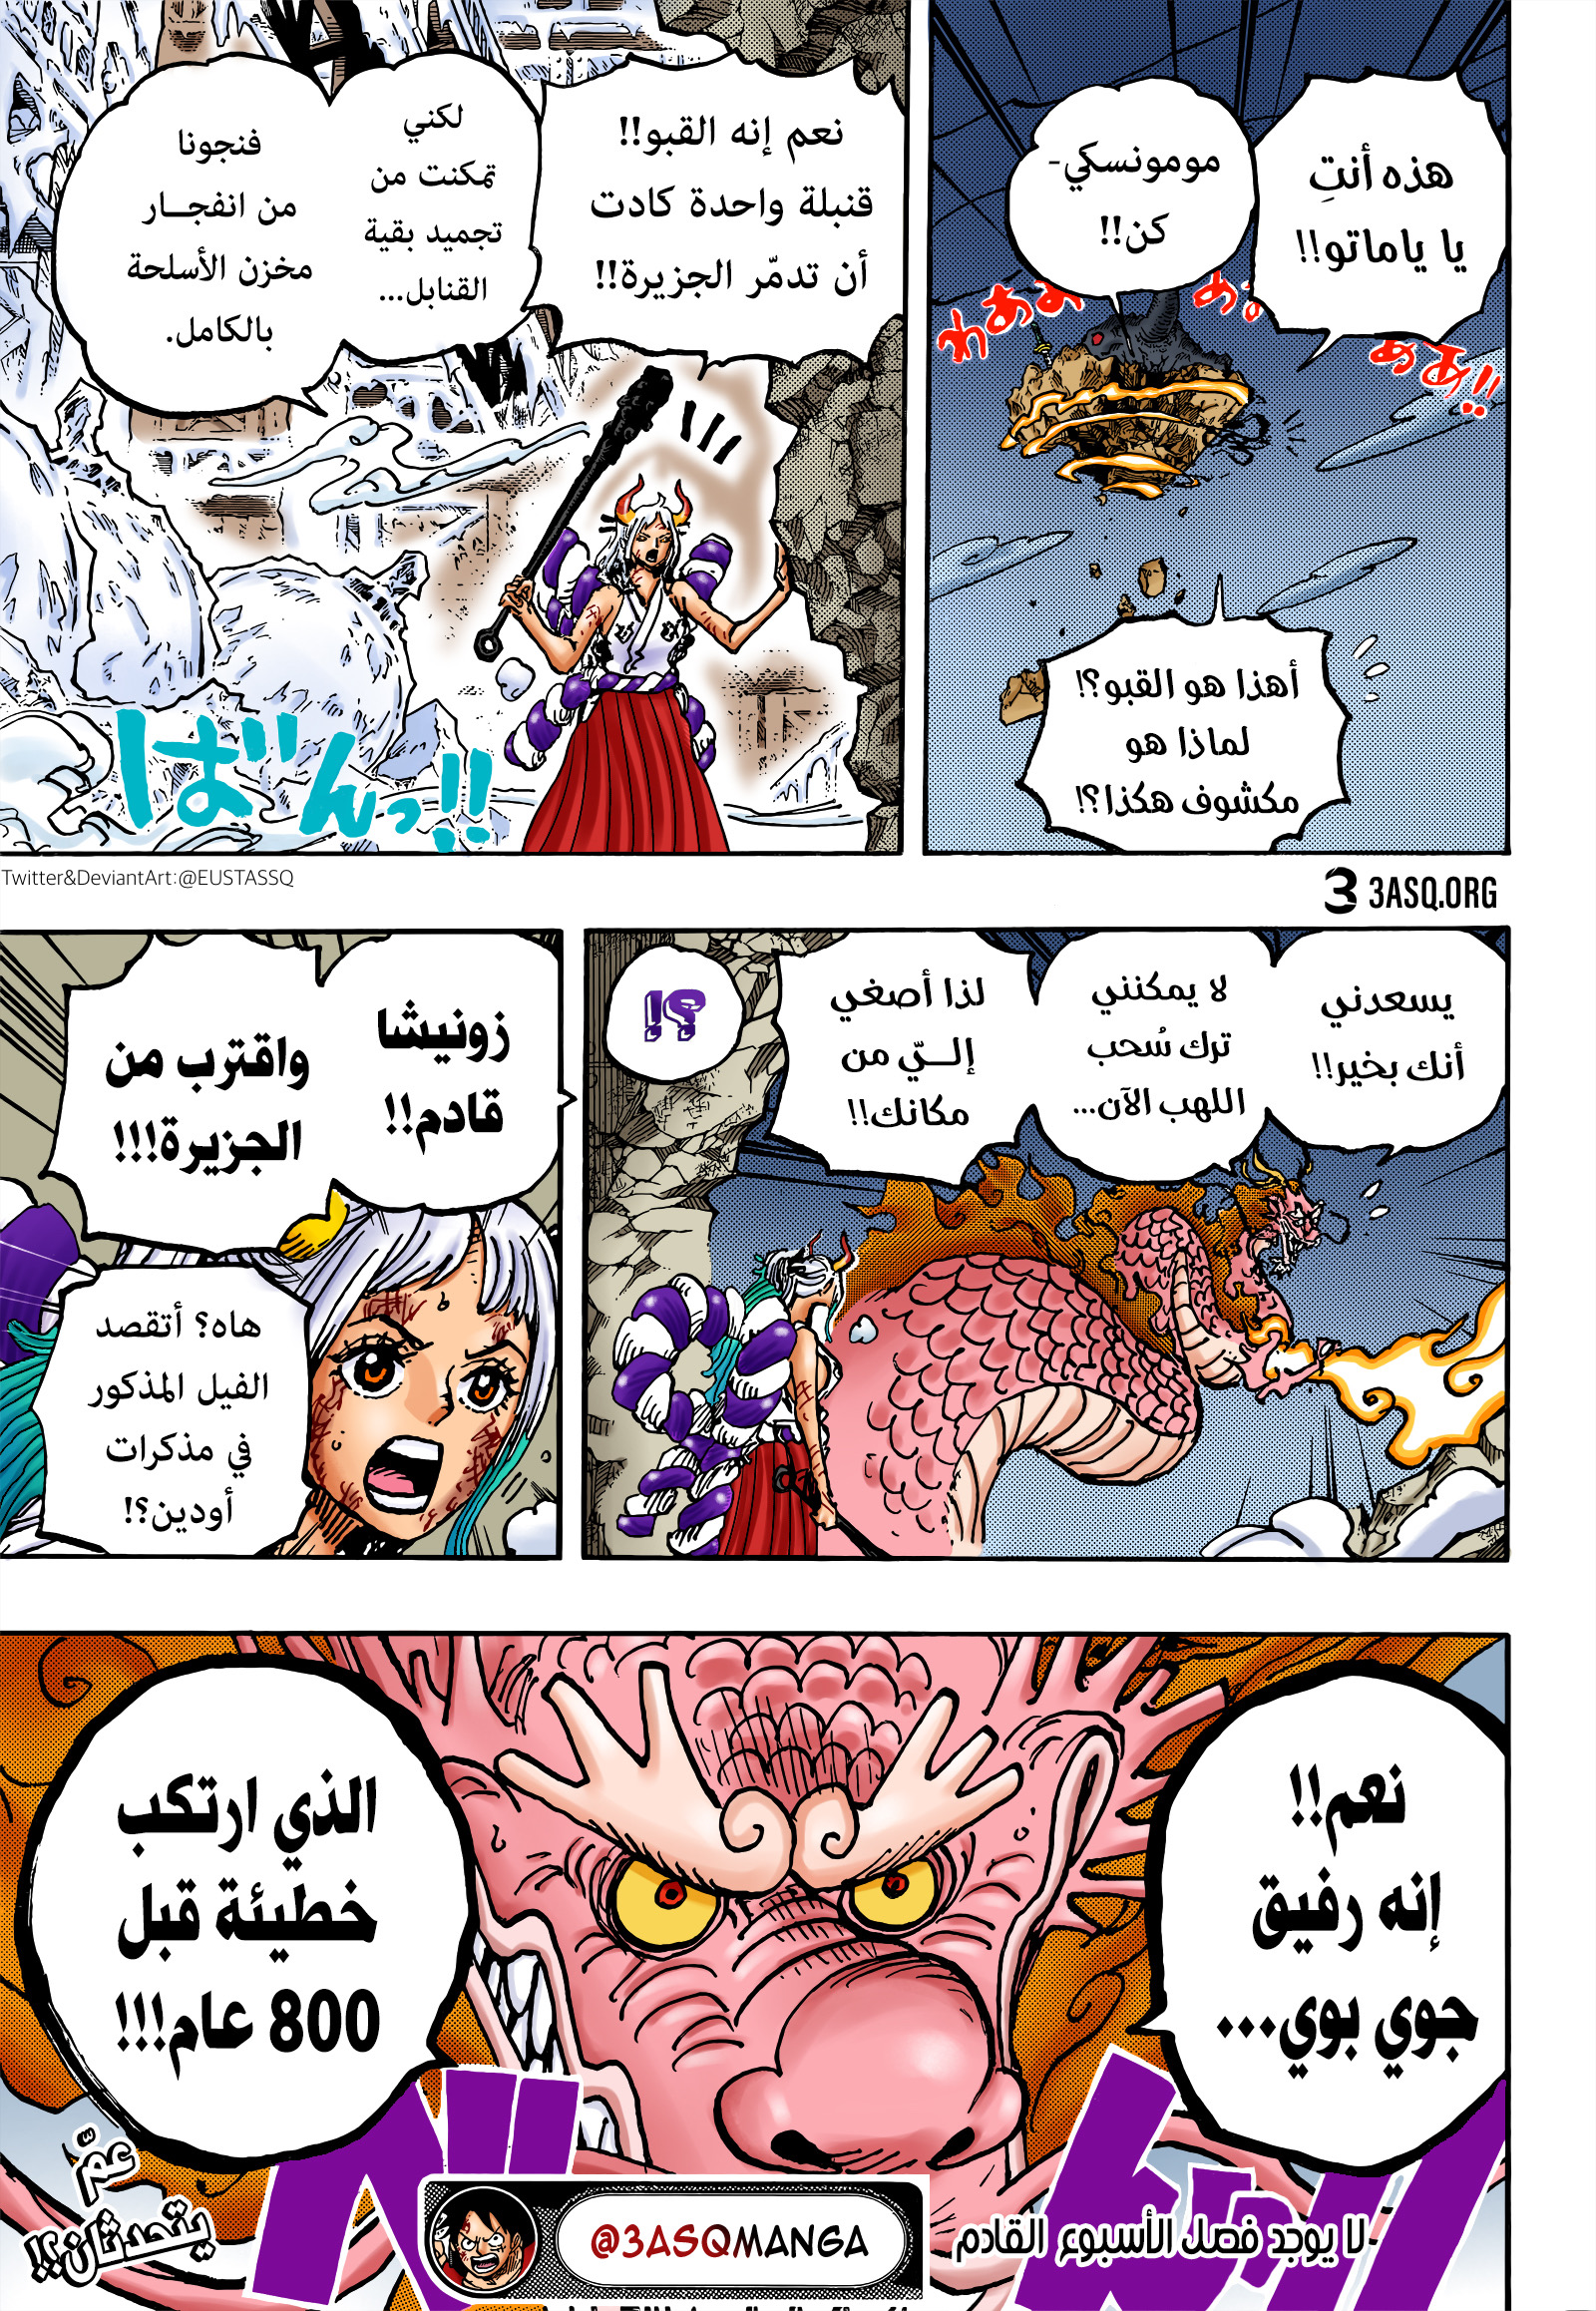 Zunesha from One Piece by TomSulaiman on DeviantArt